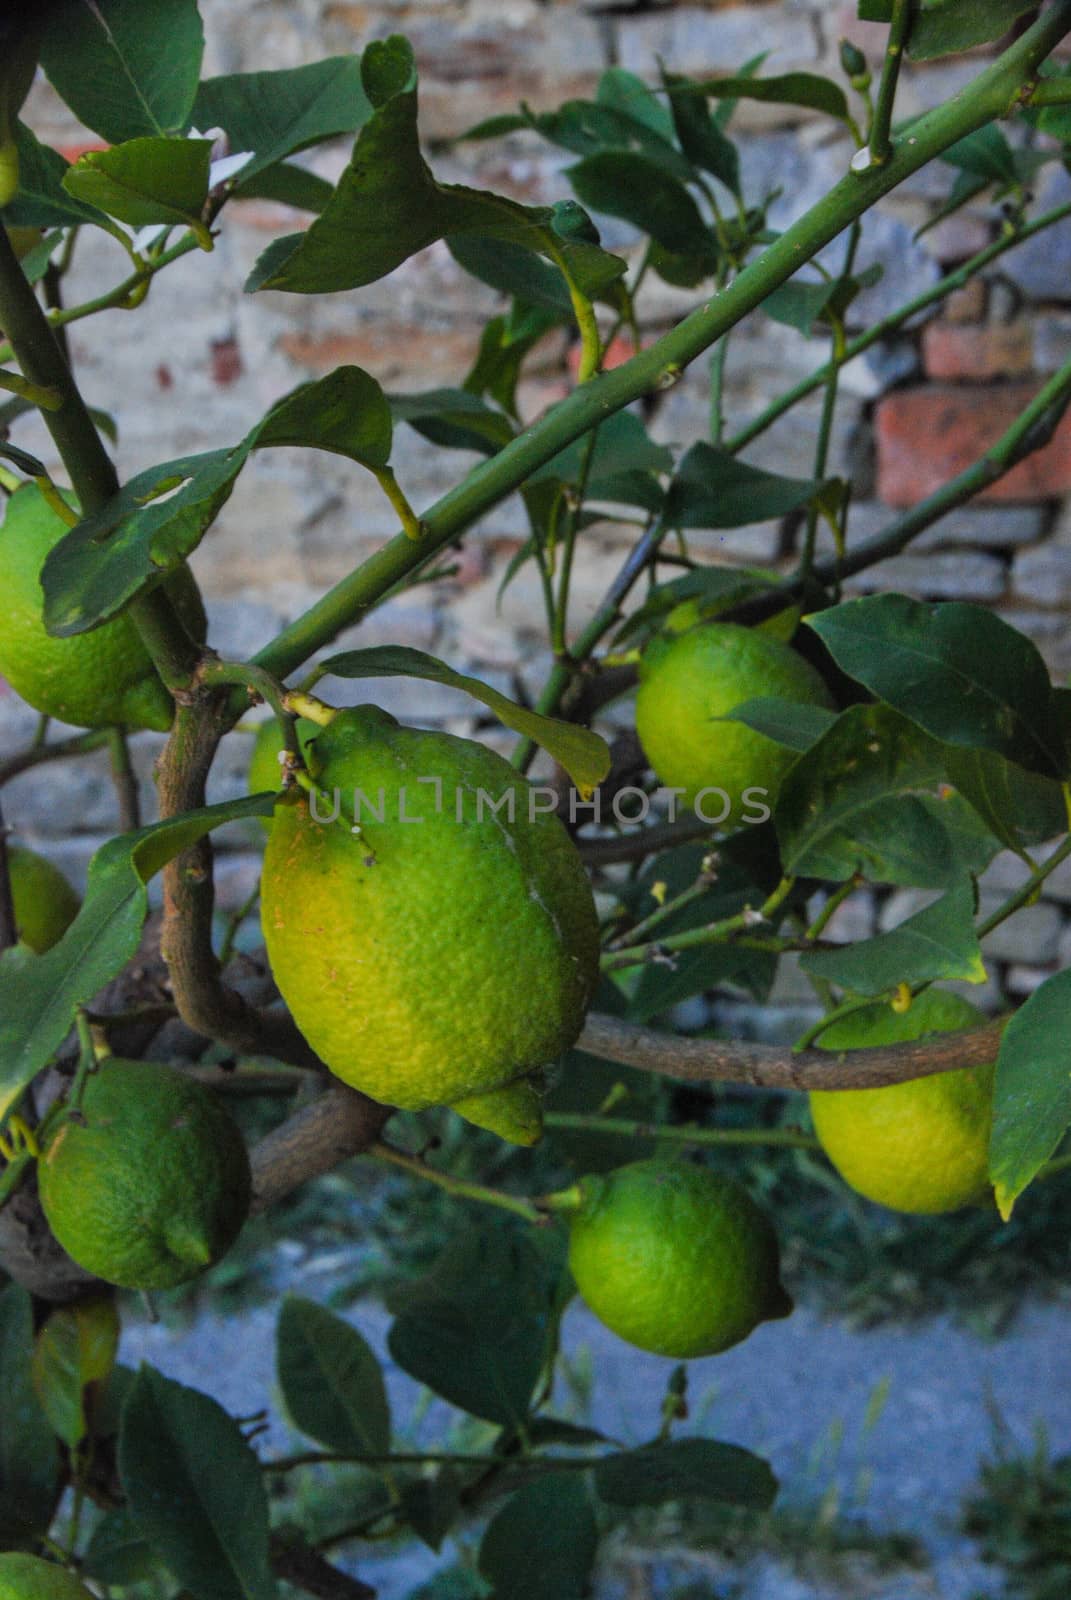 Lemons and the the lemon plant